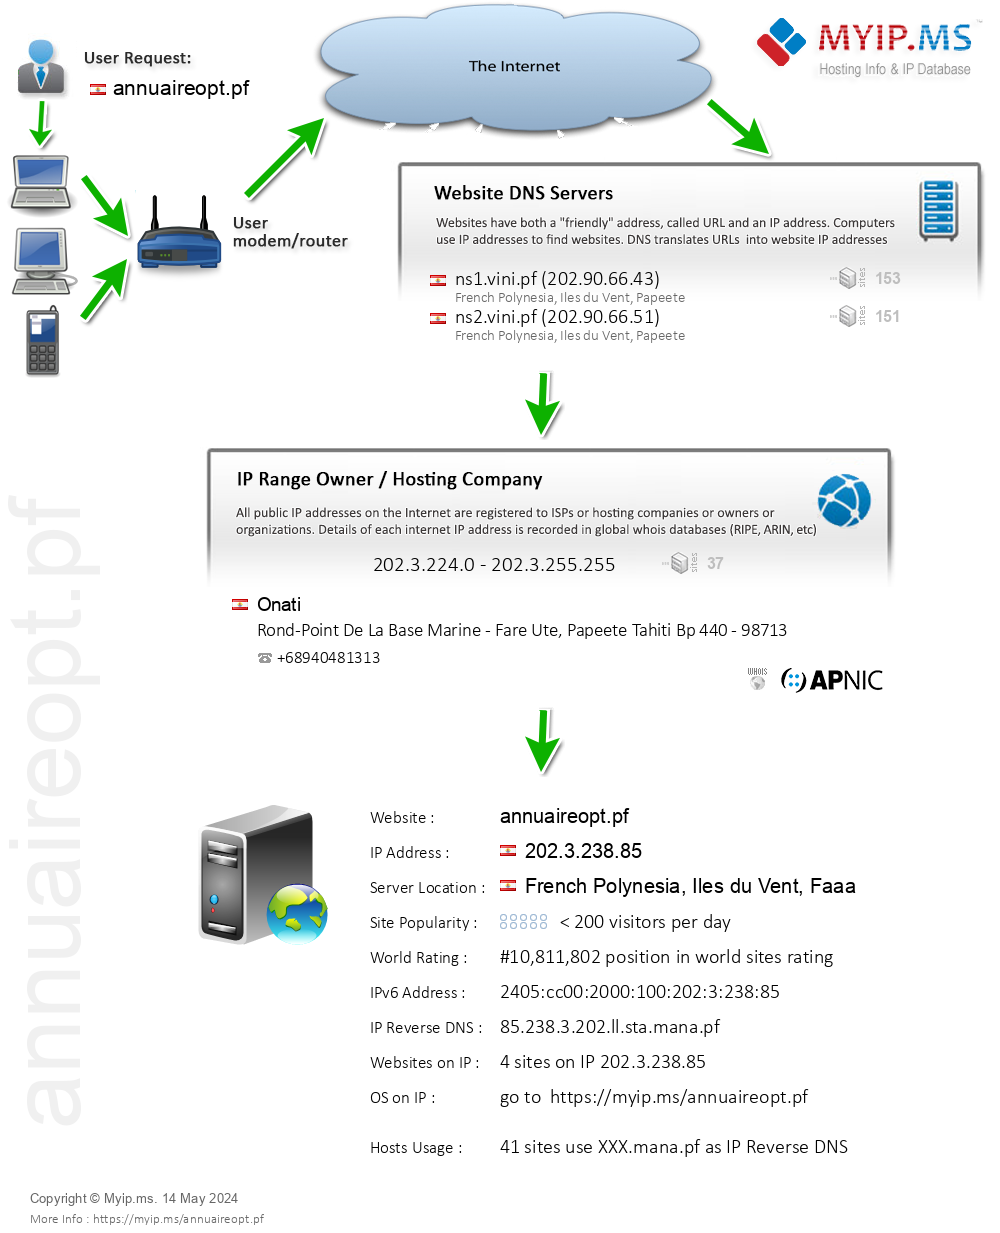 Annuaireopt.pf - Website Hosting Visual IP Diagram